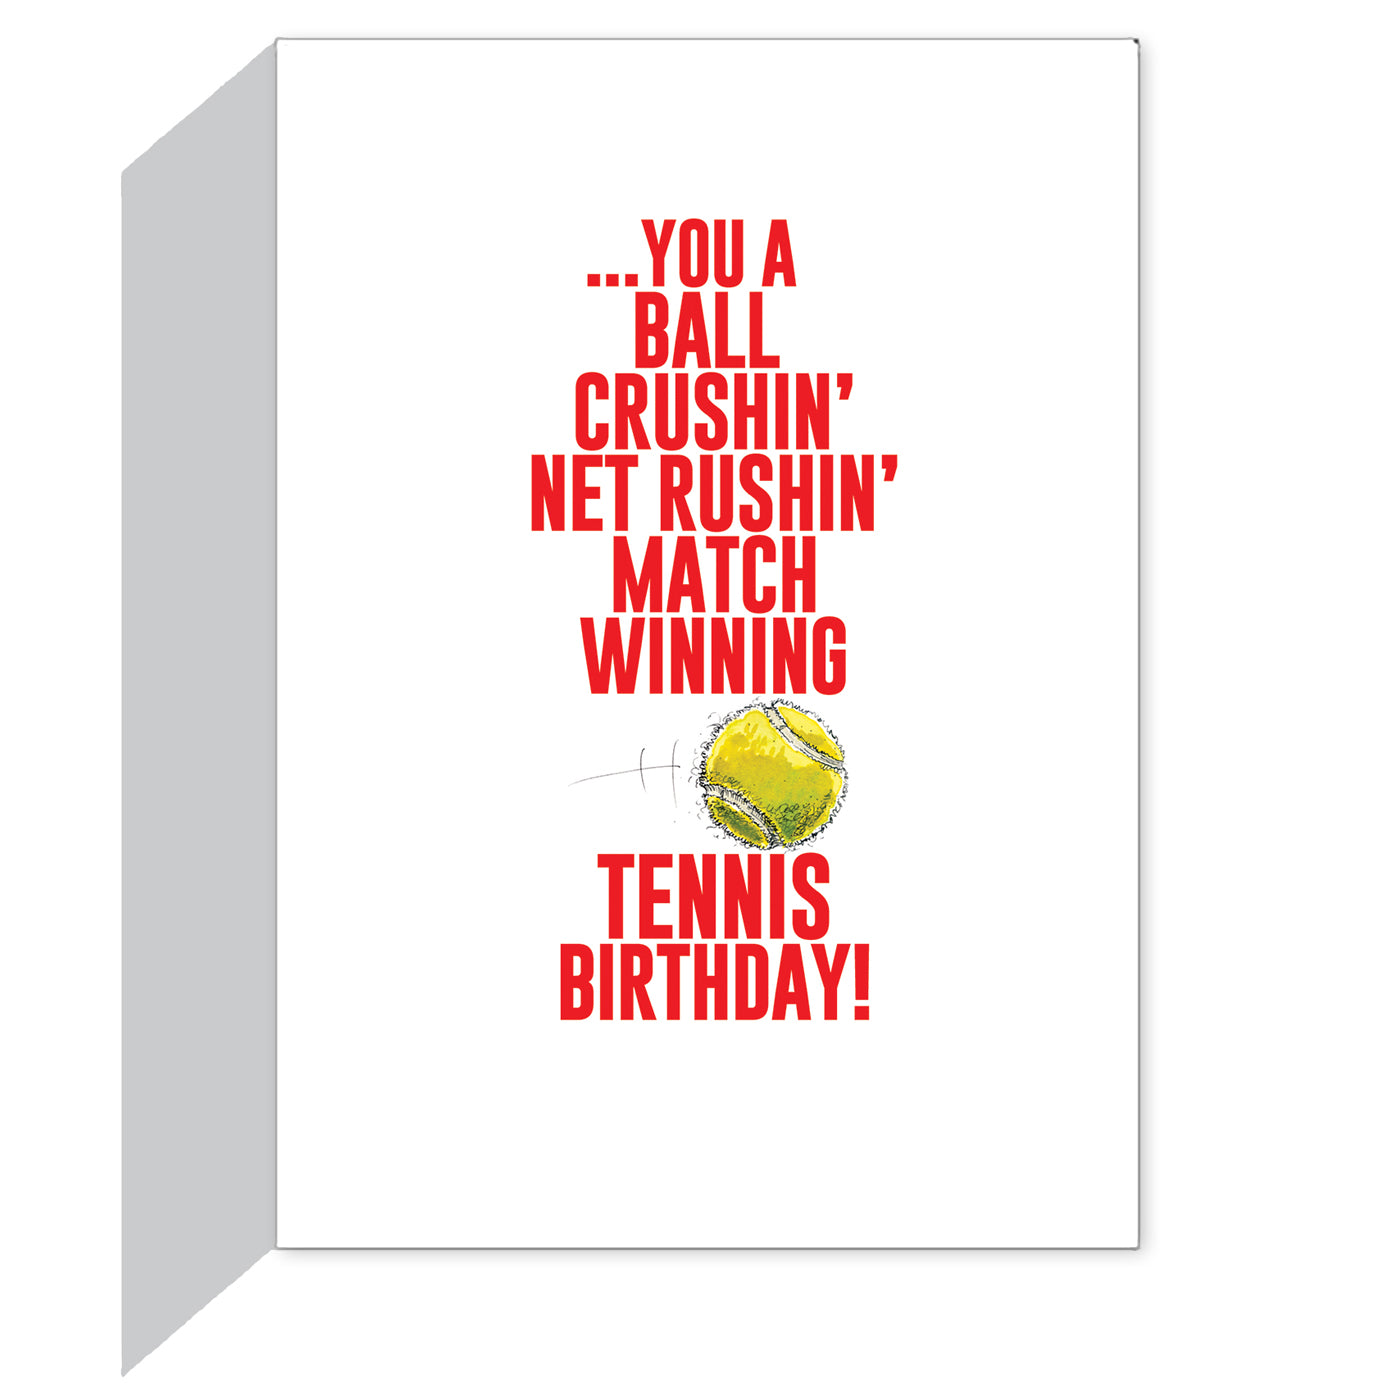 TENNIS Birthday Power Player Birthday Card 1-Pack (5x7) Illustrated Sports Birthday Greeting Cards